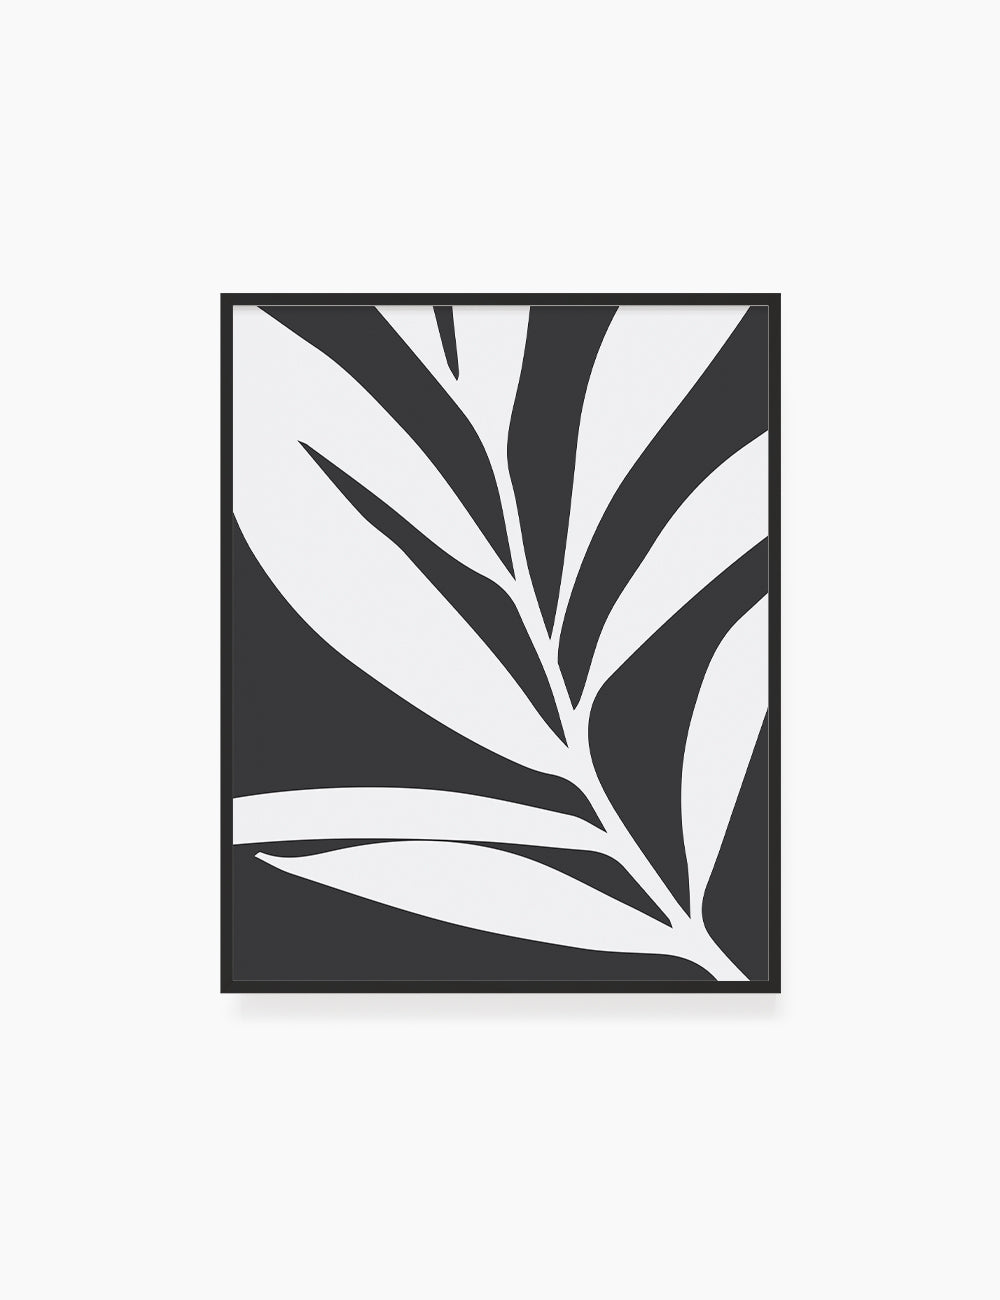 LEAF. MINIMALIST BOTANICAL BOHO ART. BLACK AND WHITE. Minimal Aesthetic. Clean Design. Printable Wall Art Illustration. - PAPER MOON Art & Design